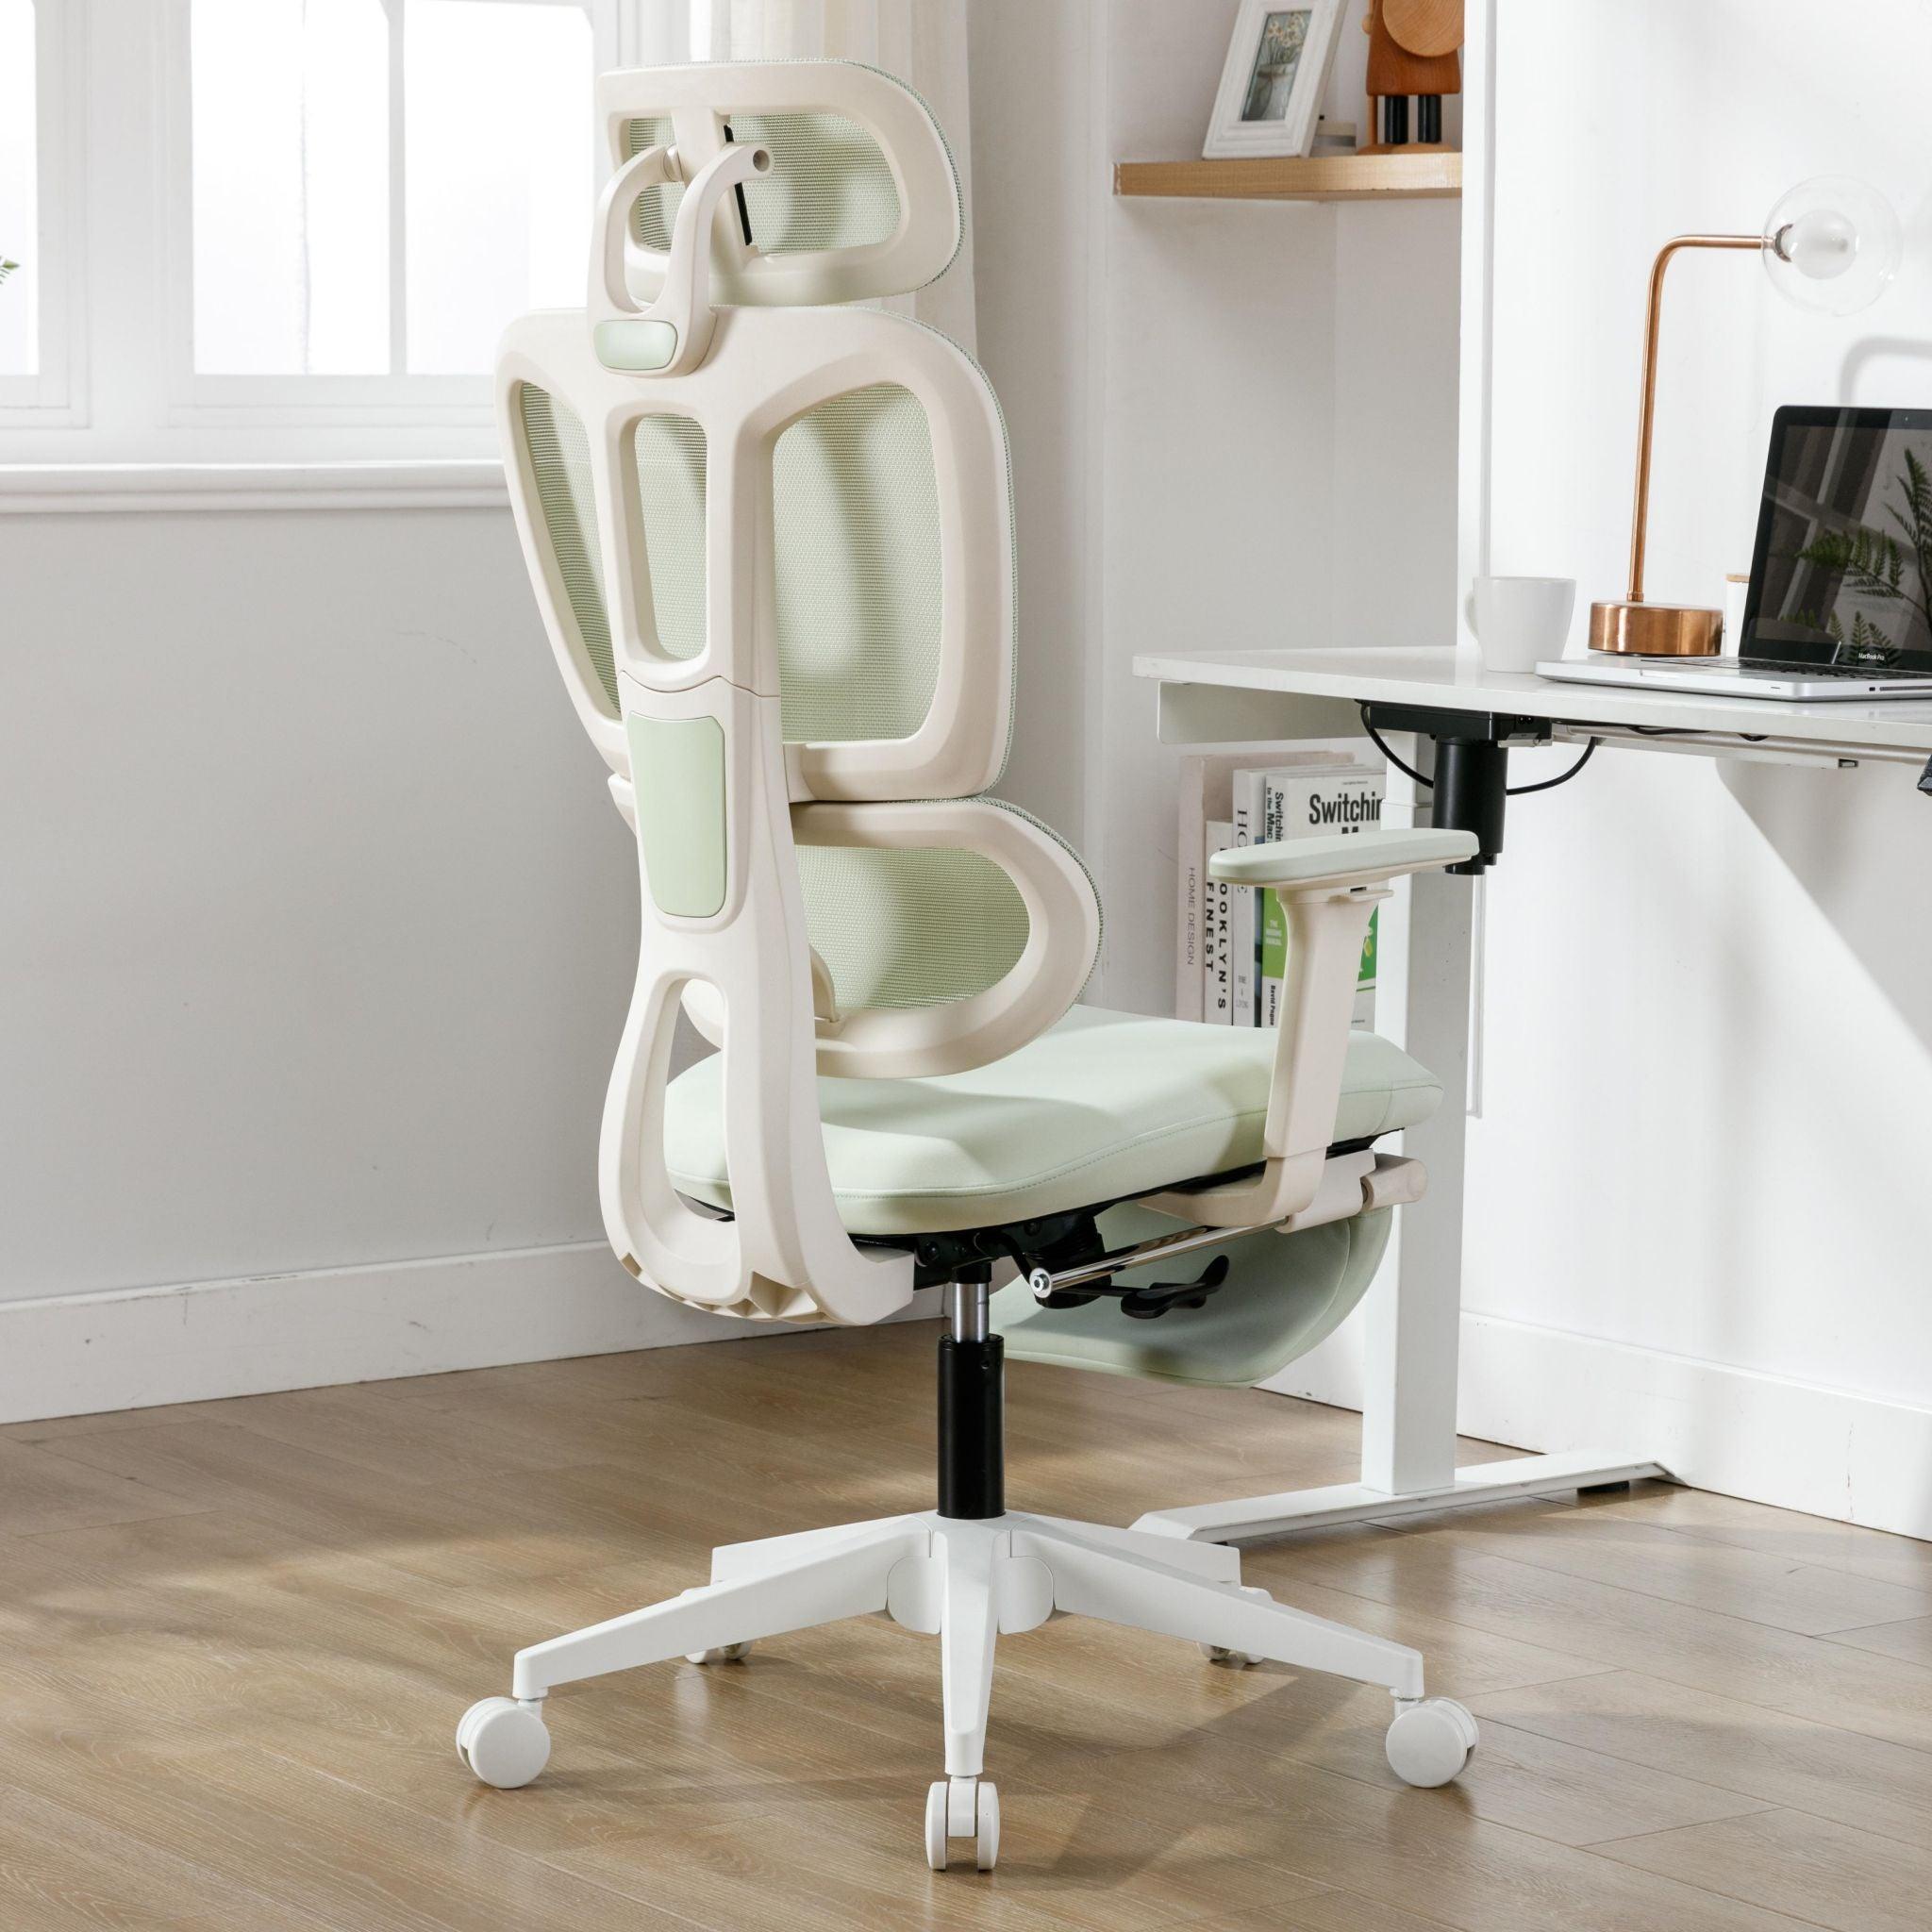 Ergonomic Office Chair Pro 3116 - Honsit Chair